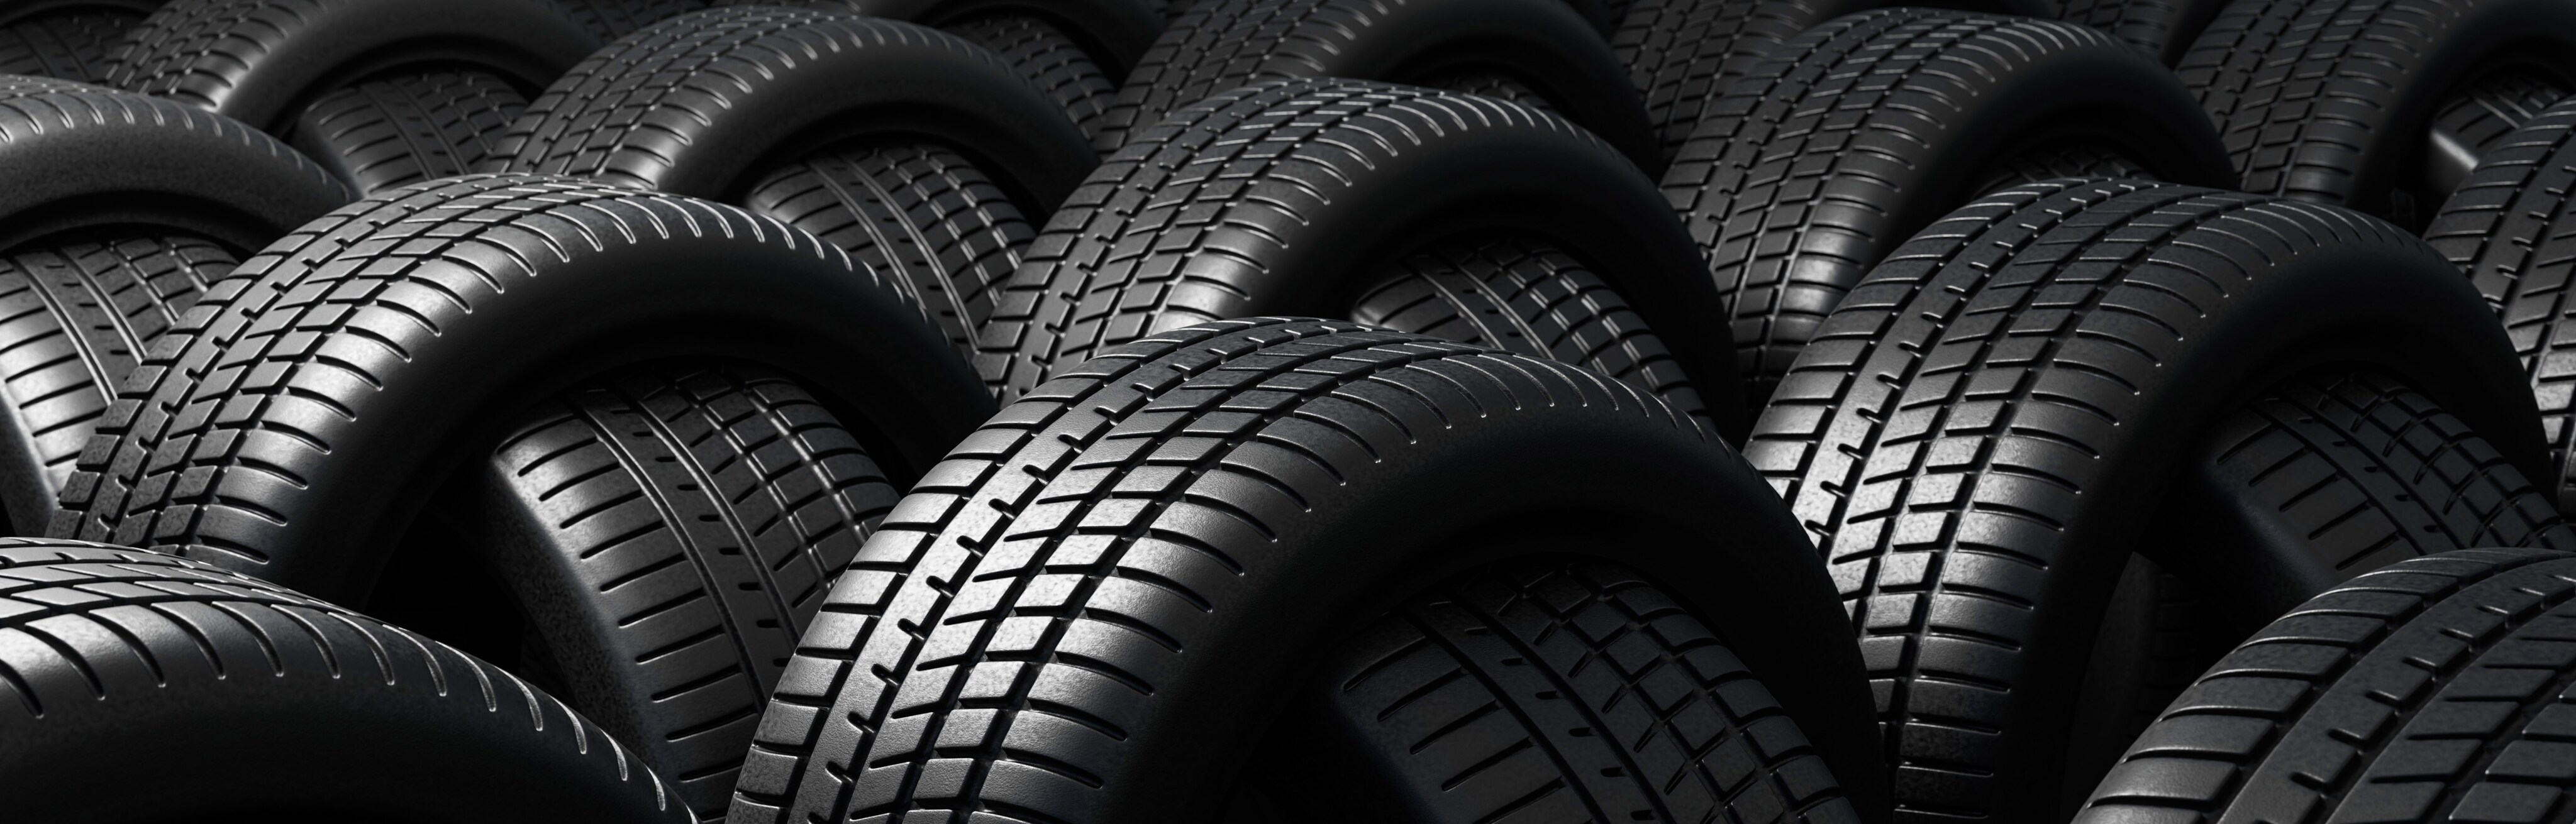 tires arranged in a geometric pattern